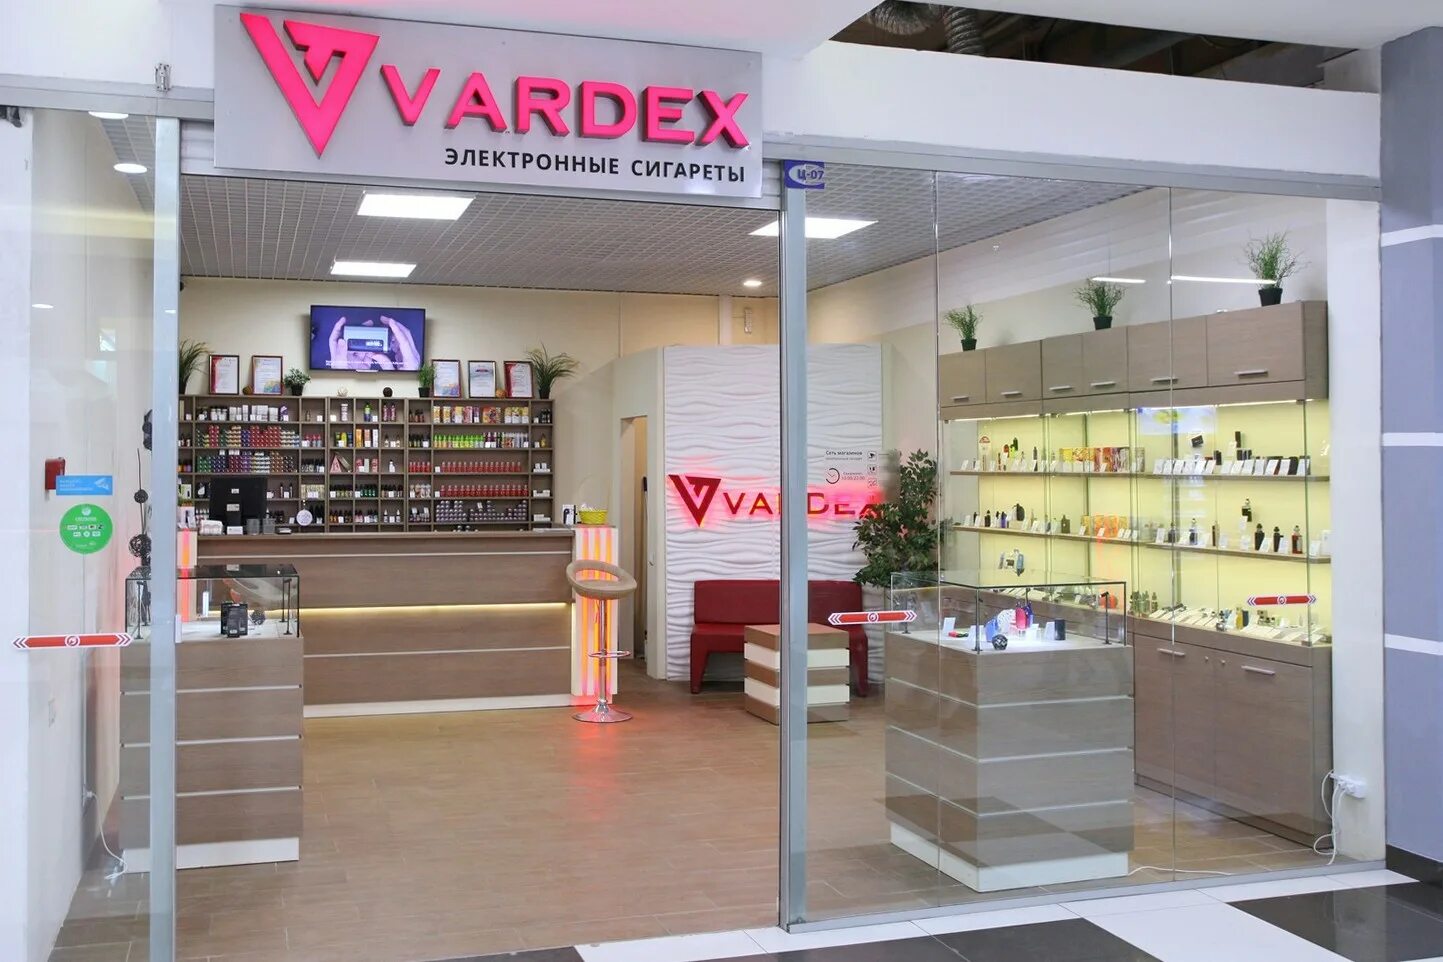 Магазин электронок. Магазин электронных сигарет. Vardex электронные сигареты. Vardex магазин. Вардекс электронные сигареты СПБ.